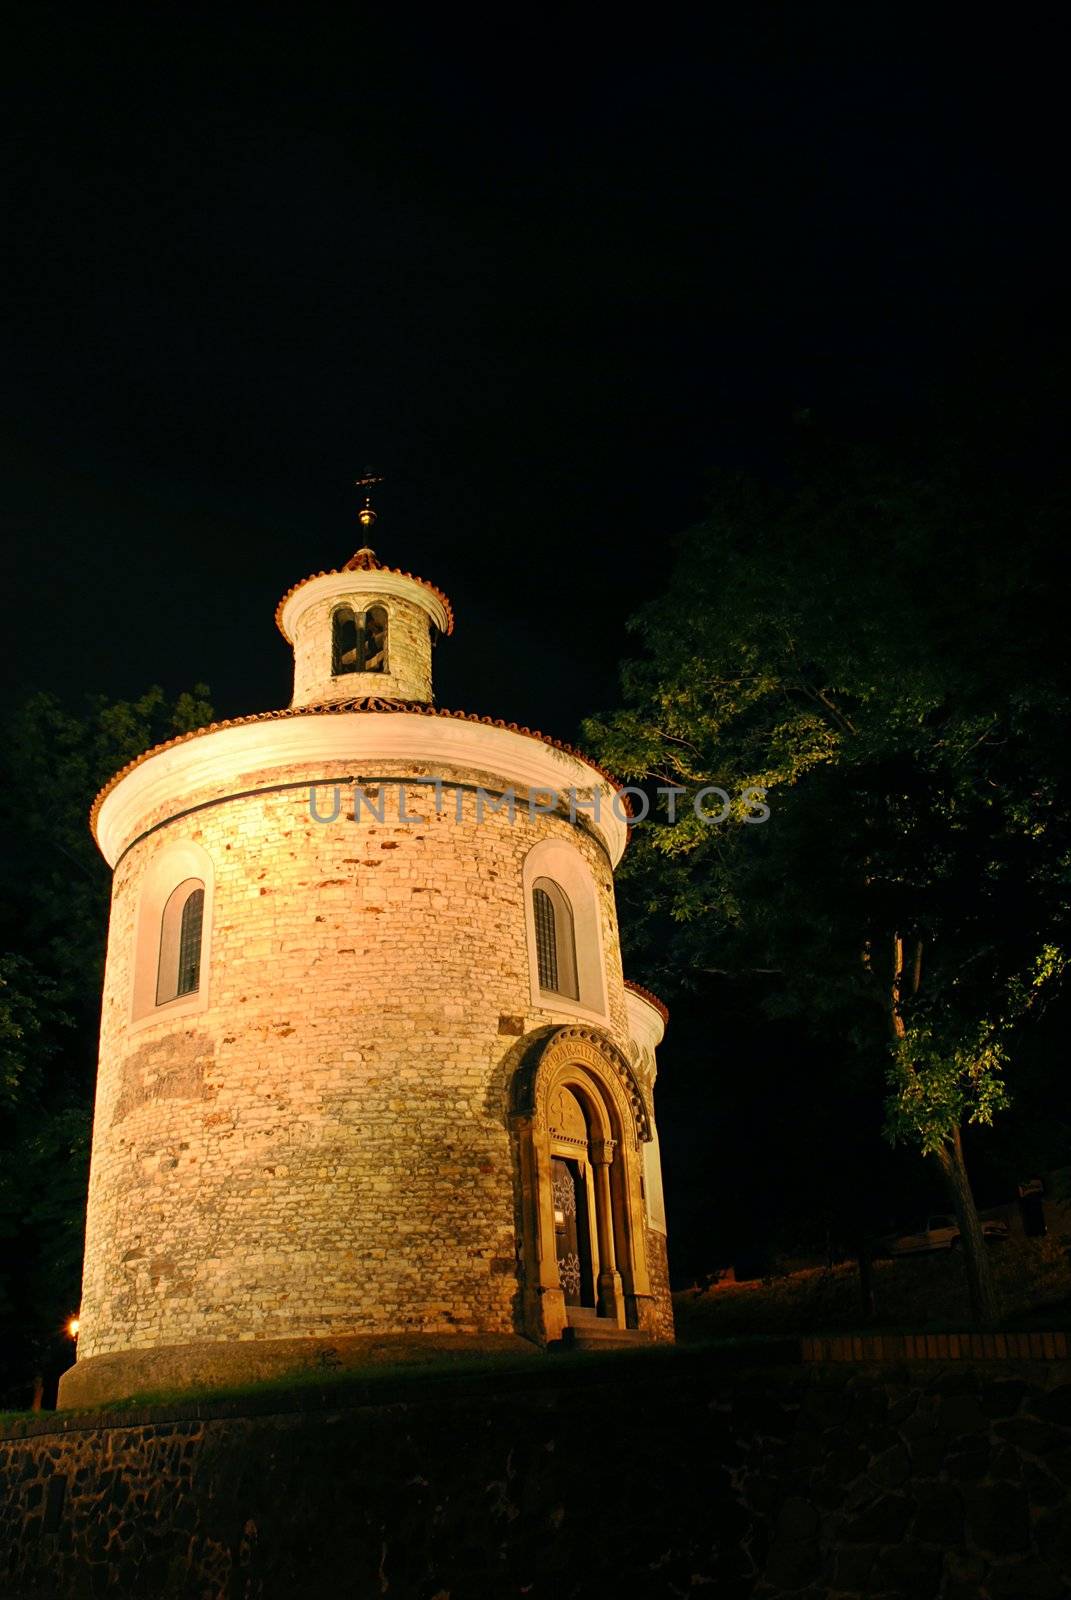 Rotunda at night by fyletto